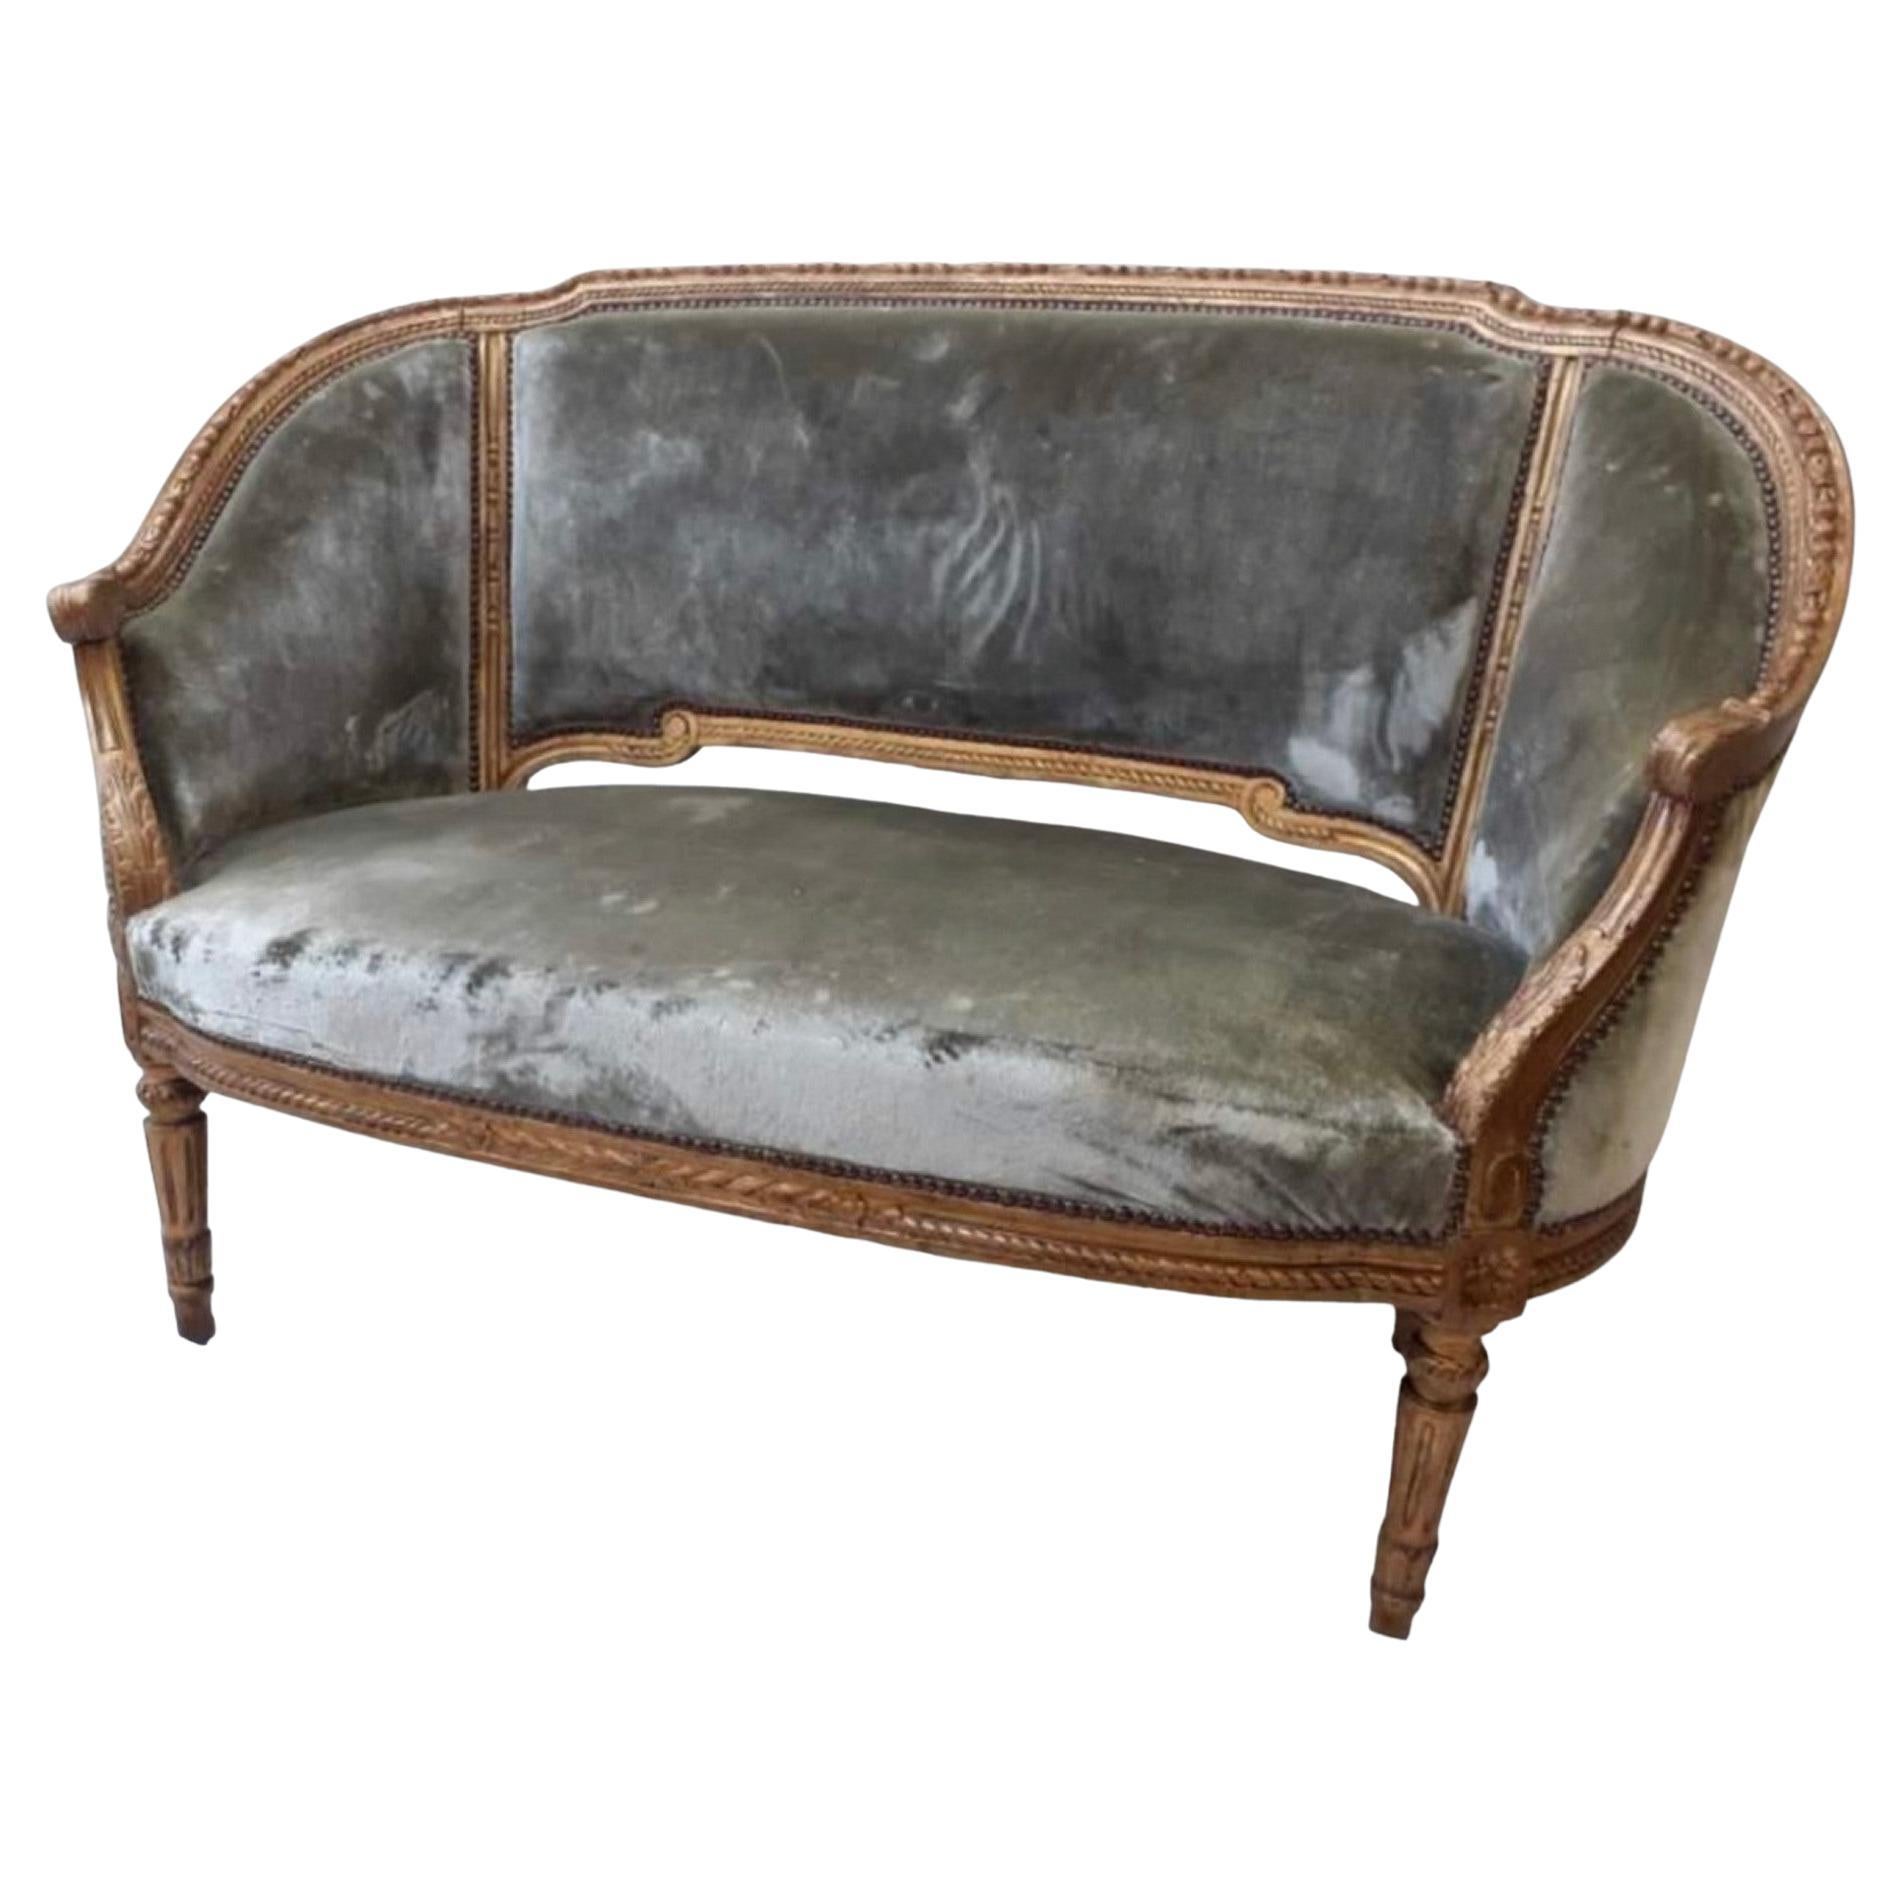 A French Giltwood Canape Sofa